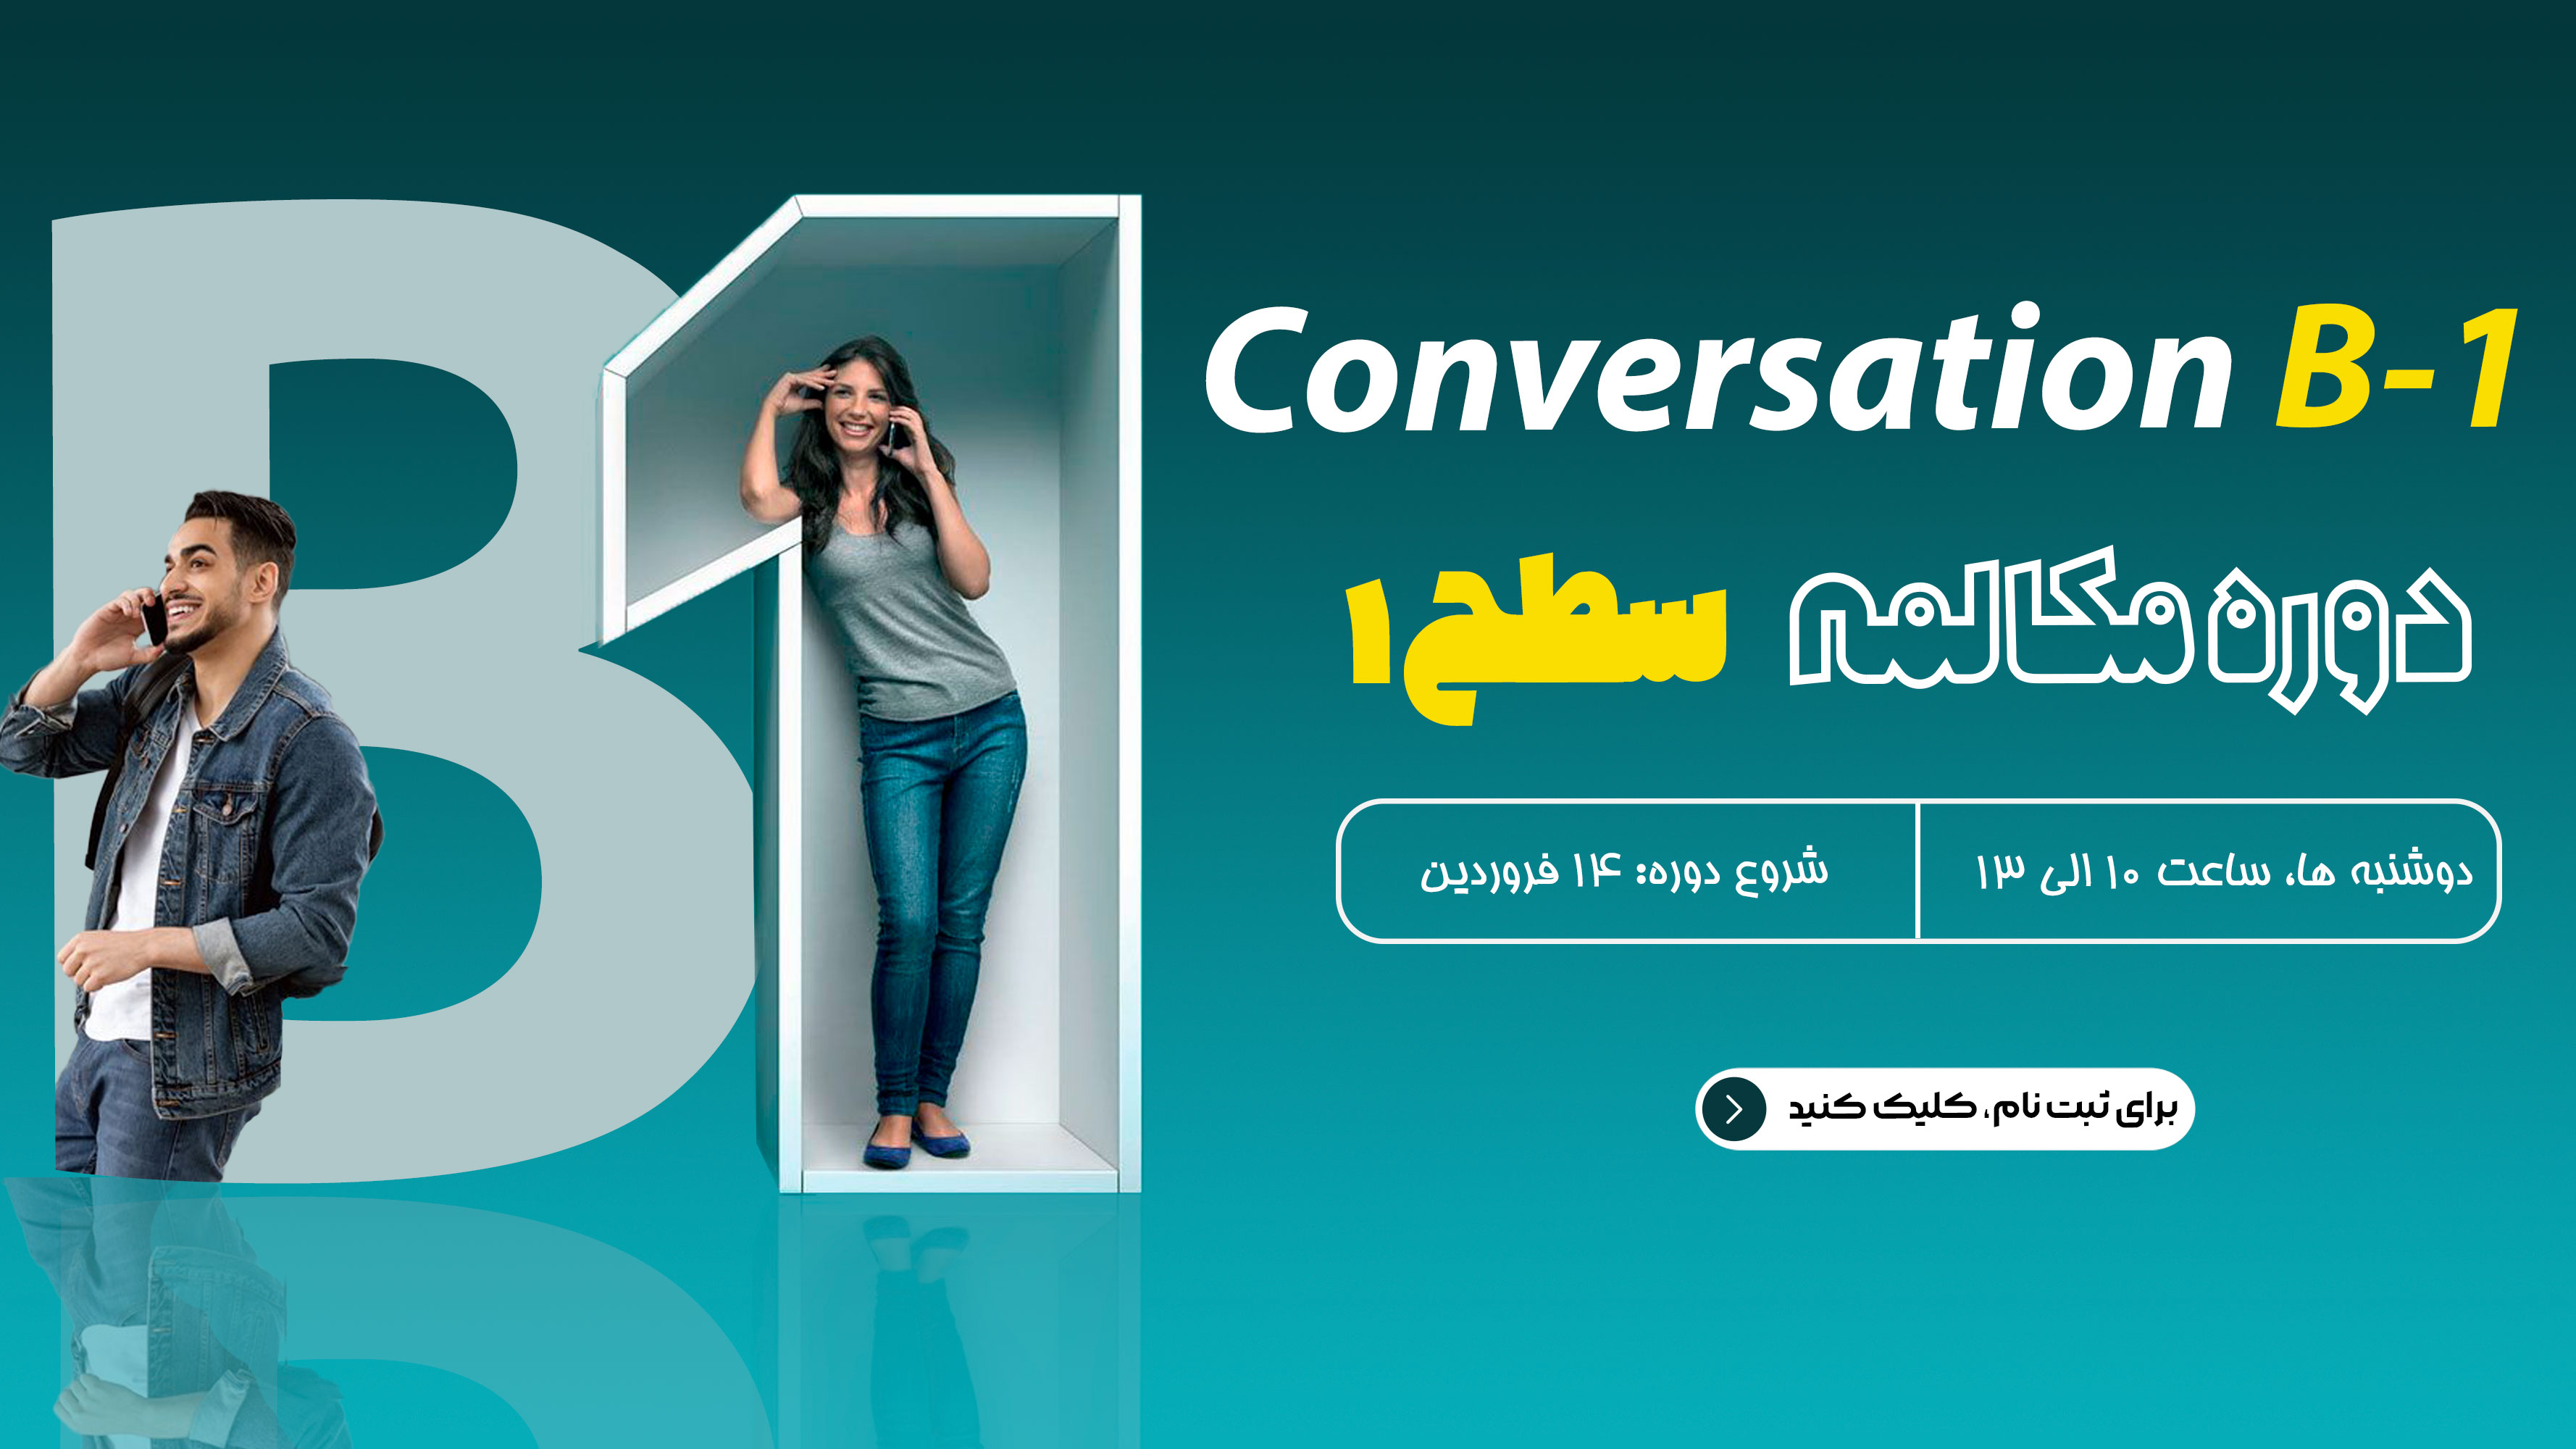 Conversation B-1